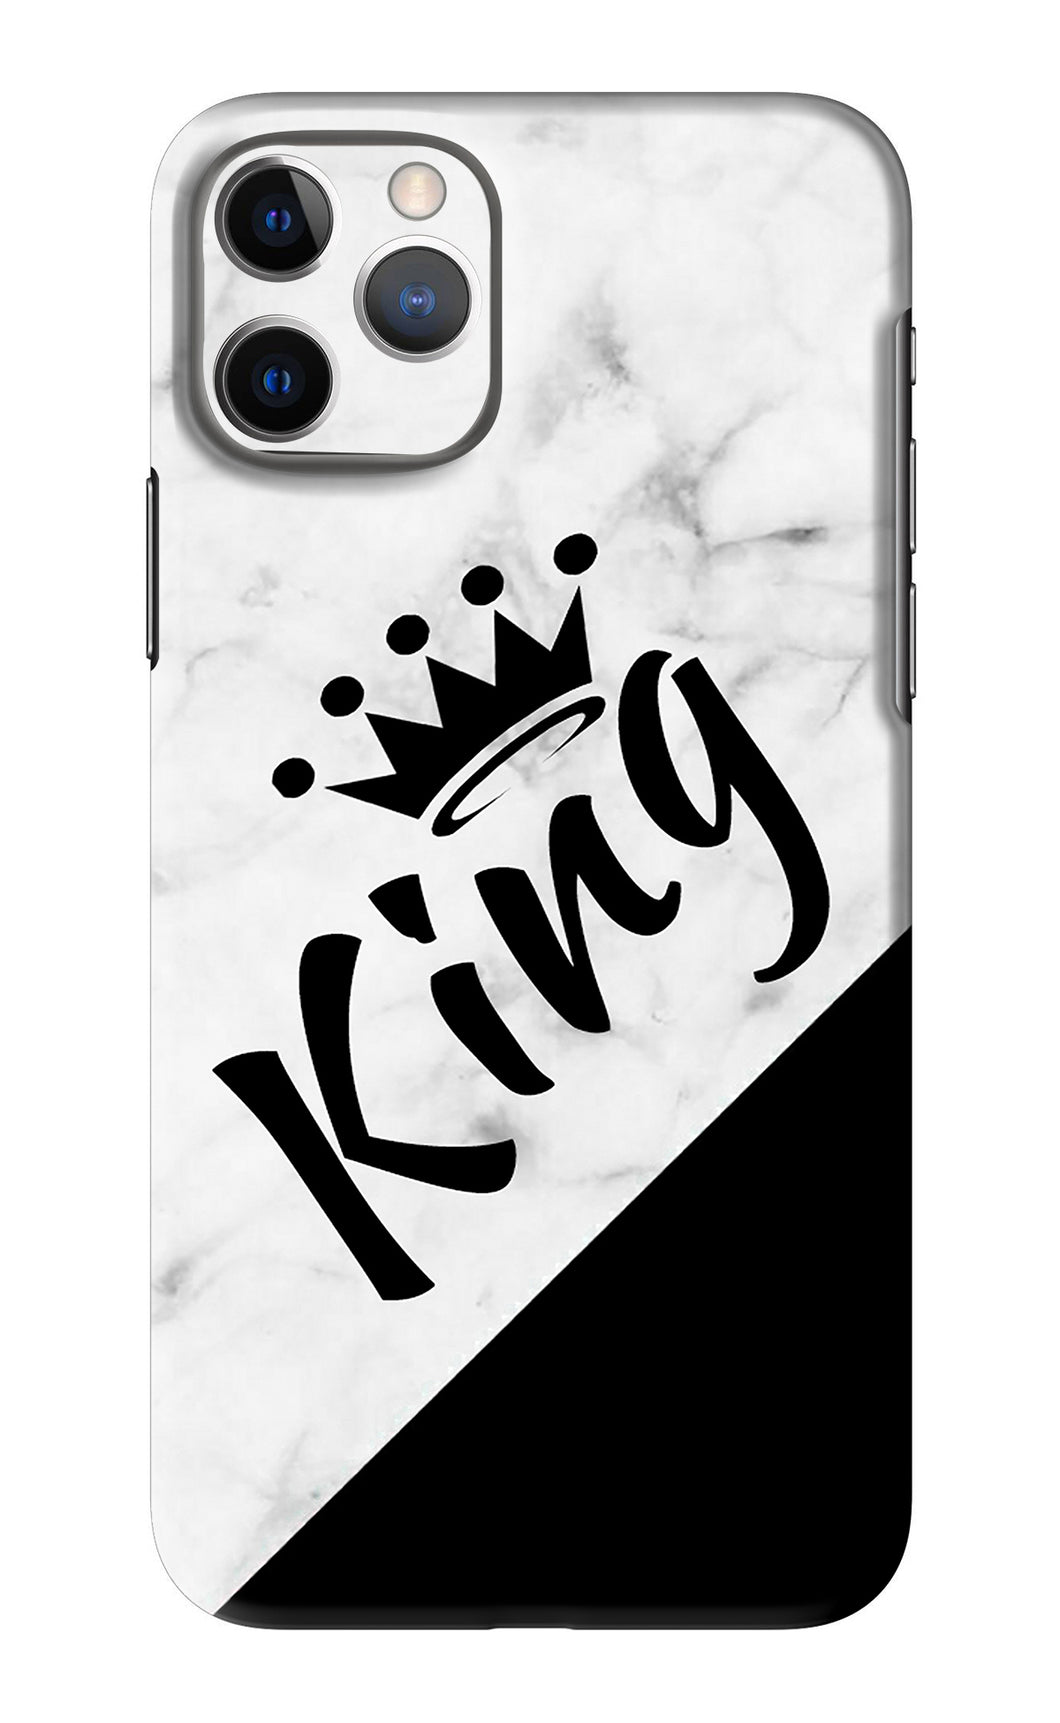 King iPhone 11 Pro Max Back Skin Wrap